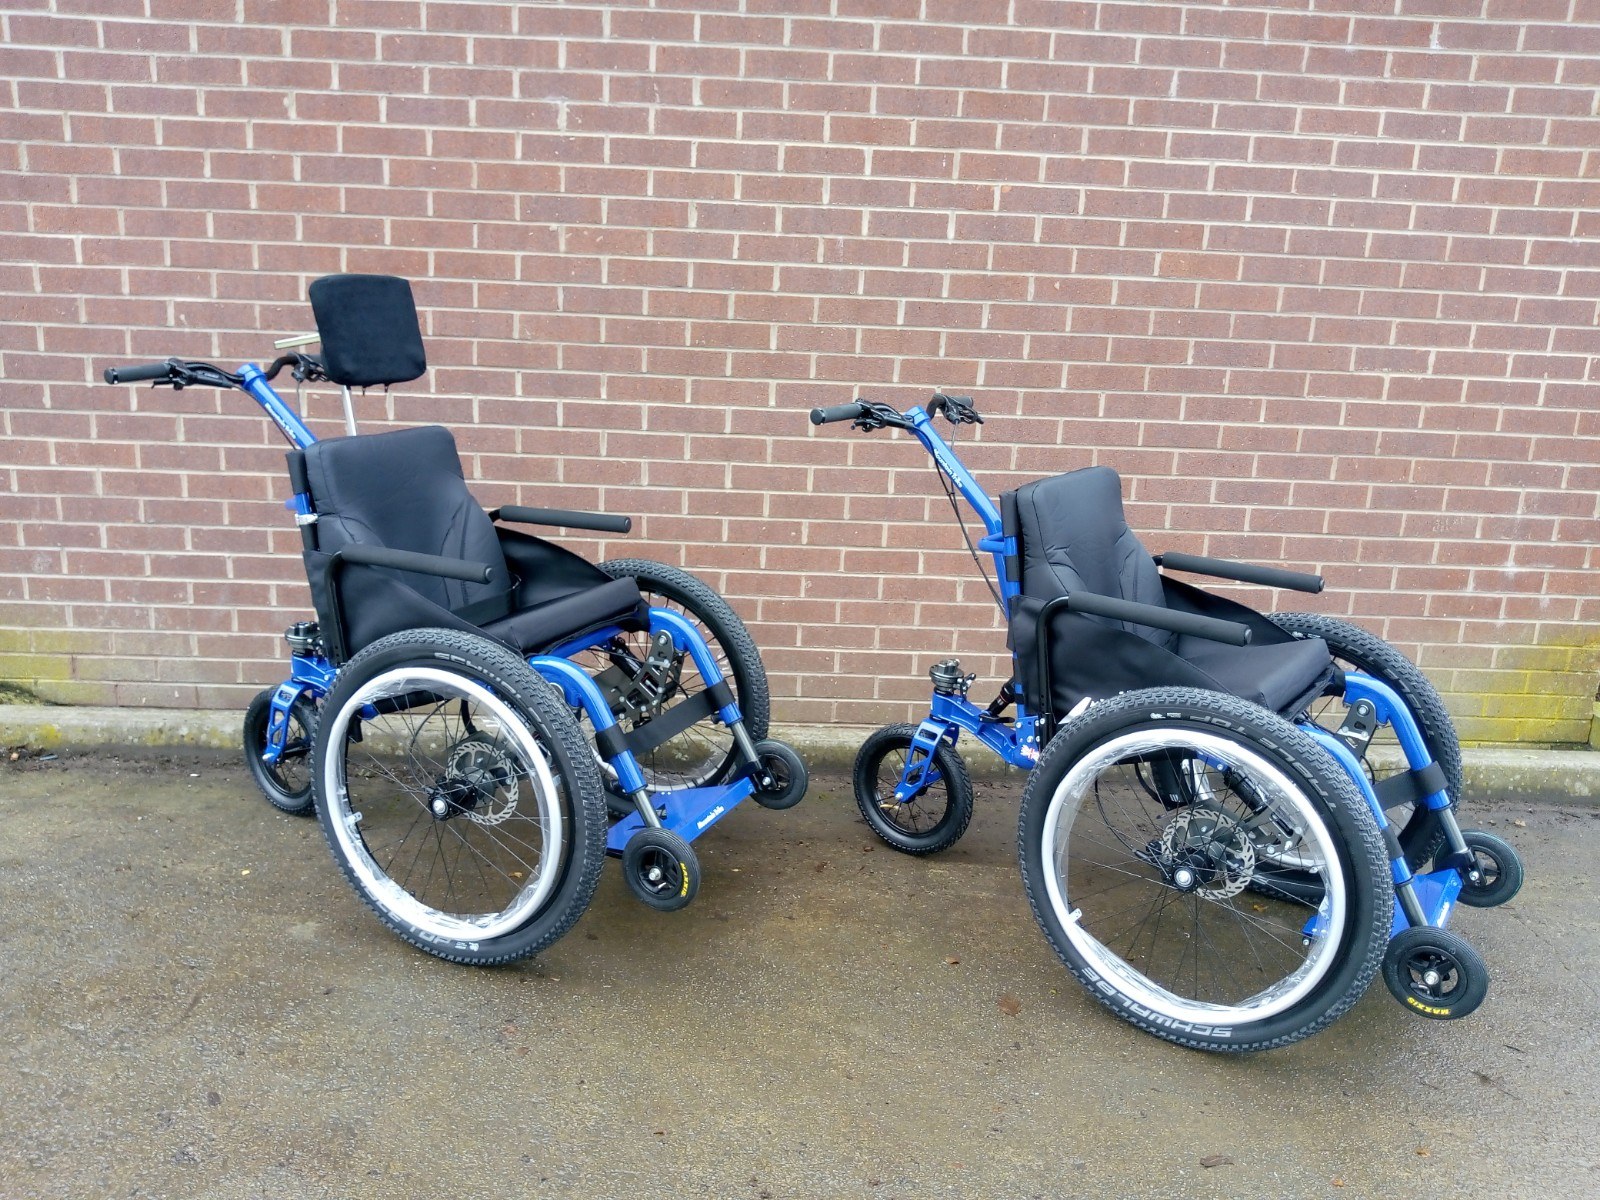 MT Push all terrain attendant wheelchairs now available at Hughenden National Trust in Bucks